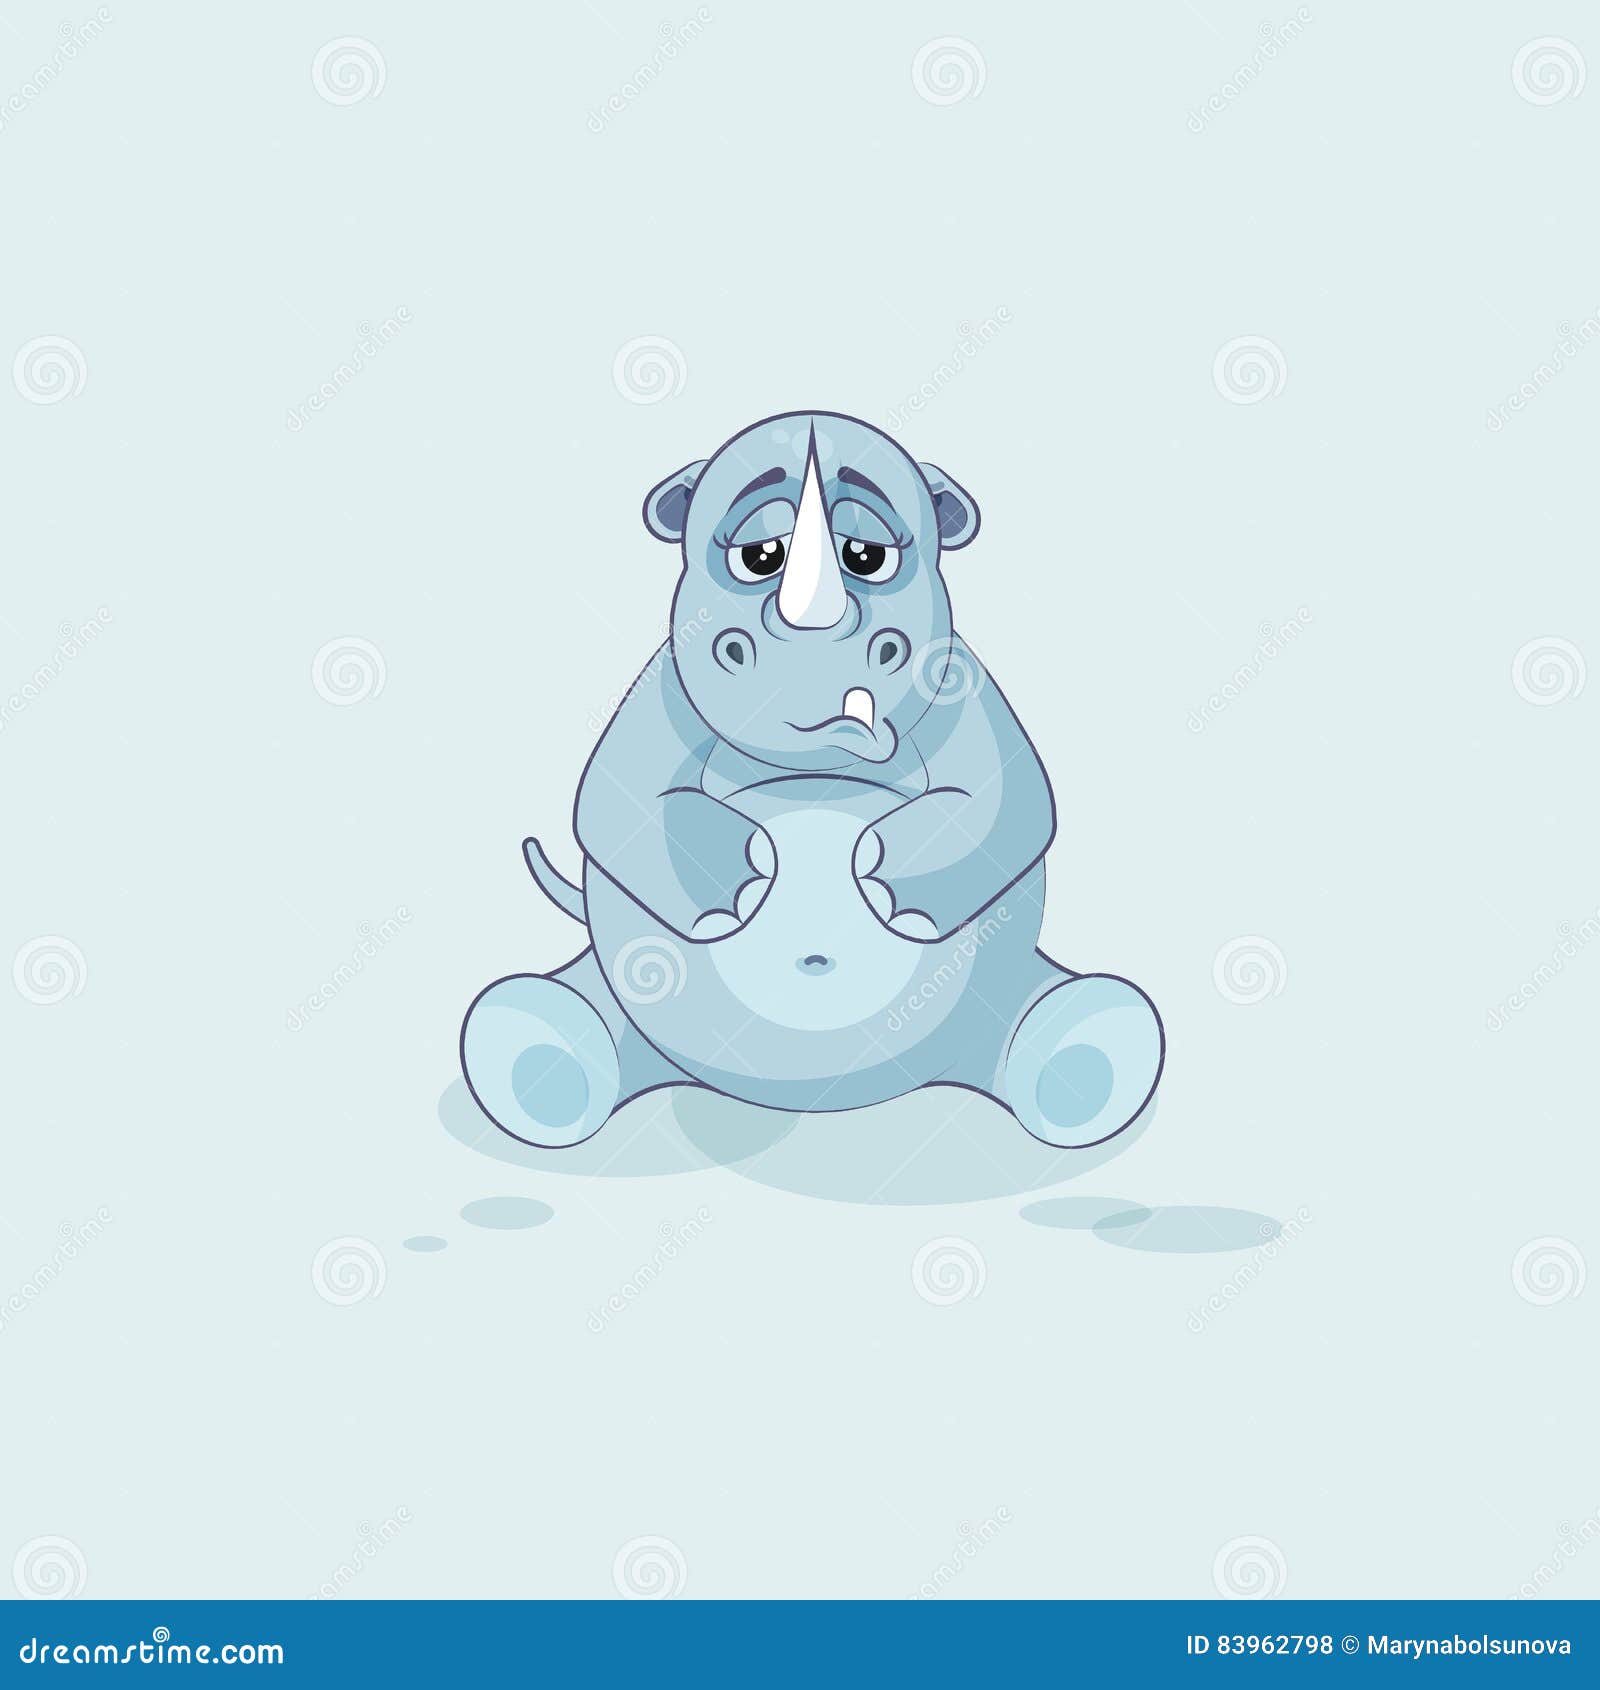 Illustration Isolated Emoji Character Cartoon Rhinoceros Sad and Frustrated  Sticker Emoticon Stock Vector - Illustration of posture, personage: 83962798